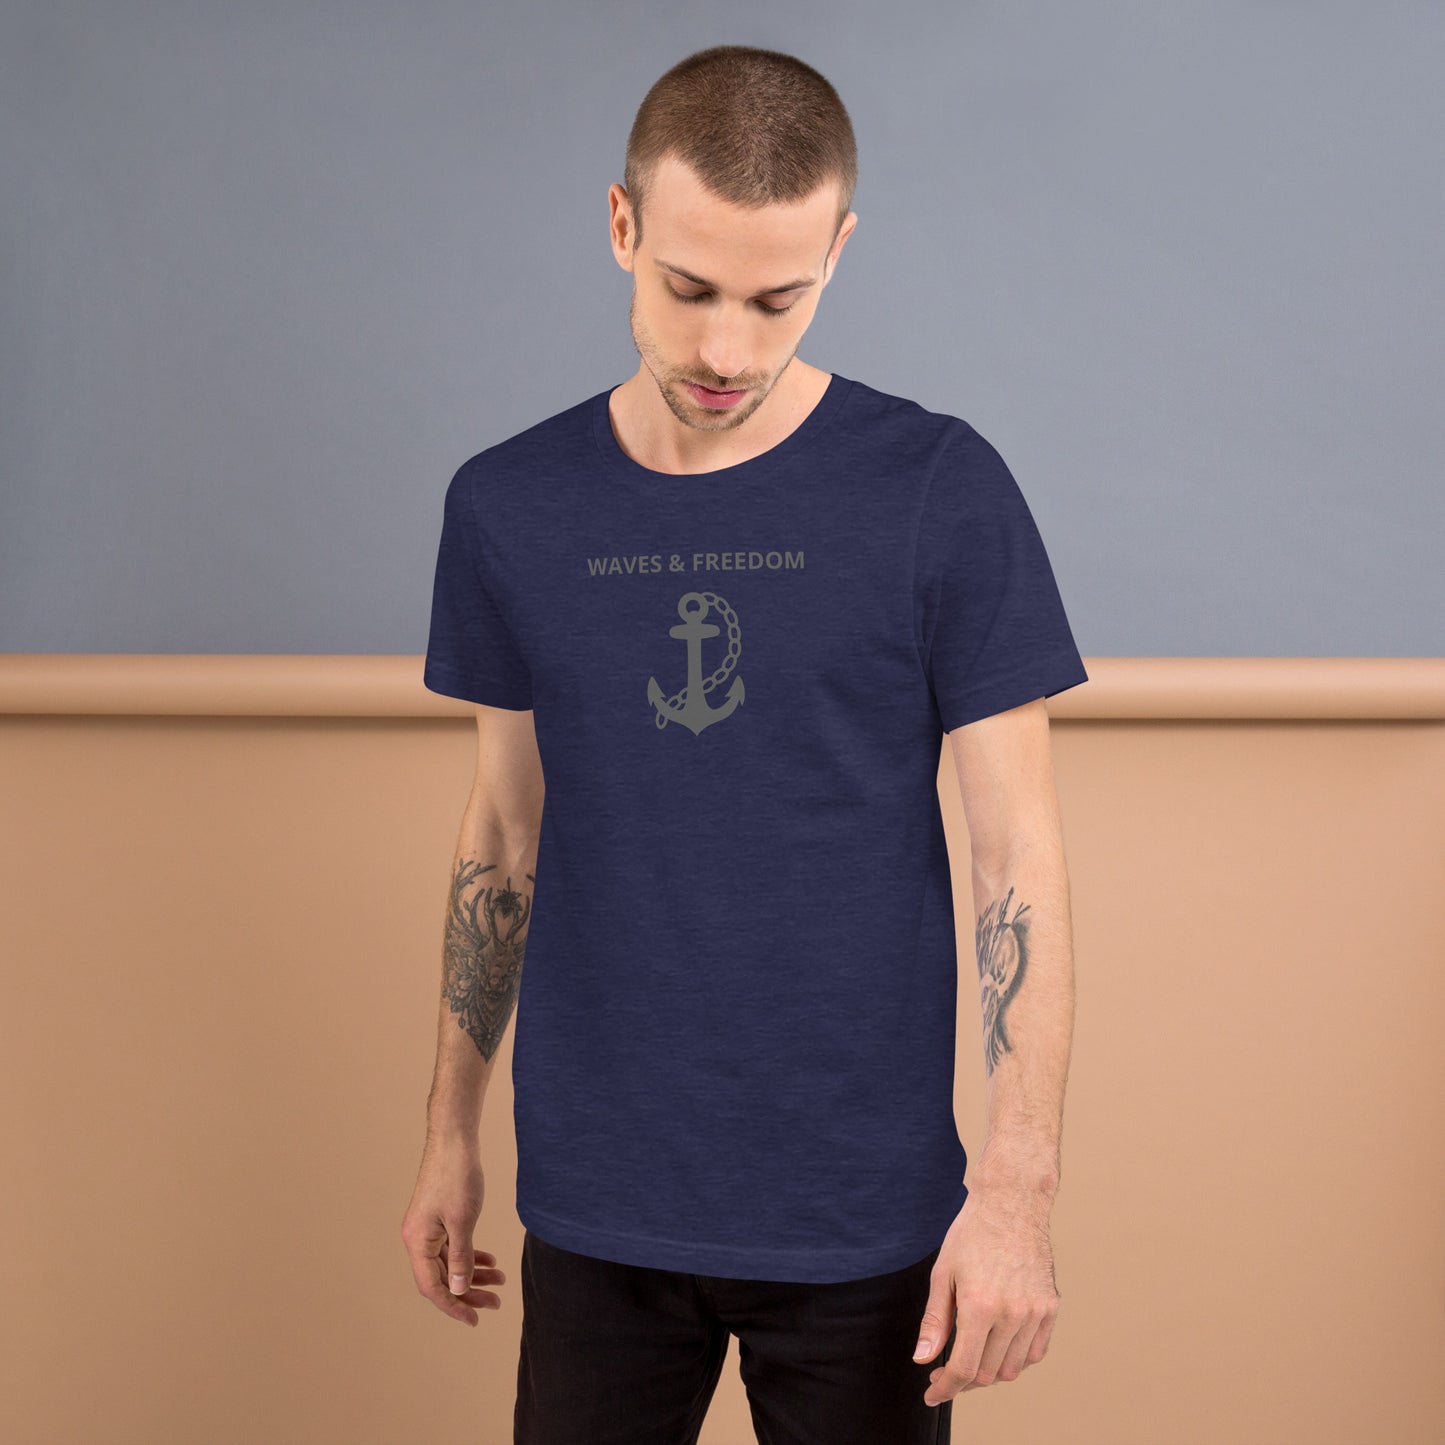 Waves & Freedom: Premium Unisex t-shirt by Gills & Water